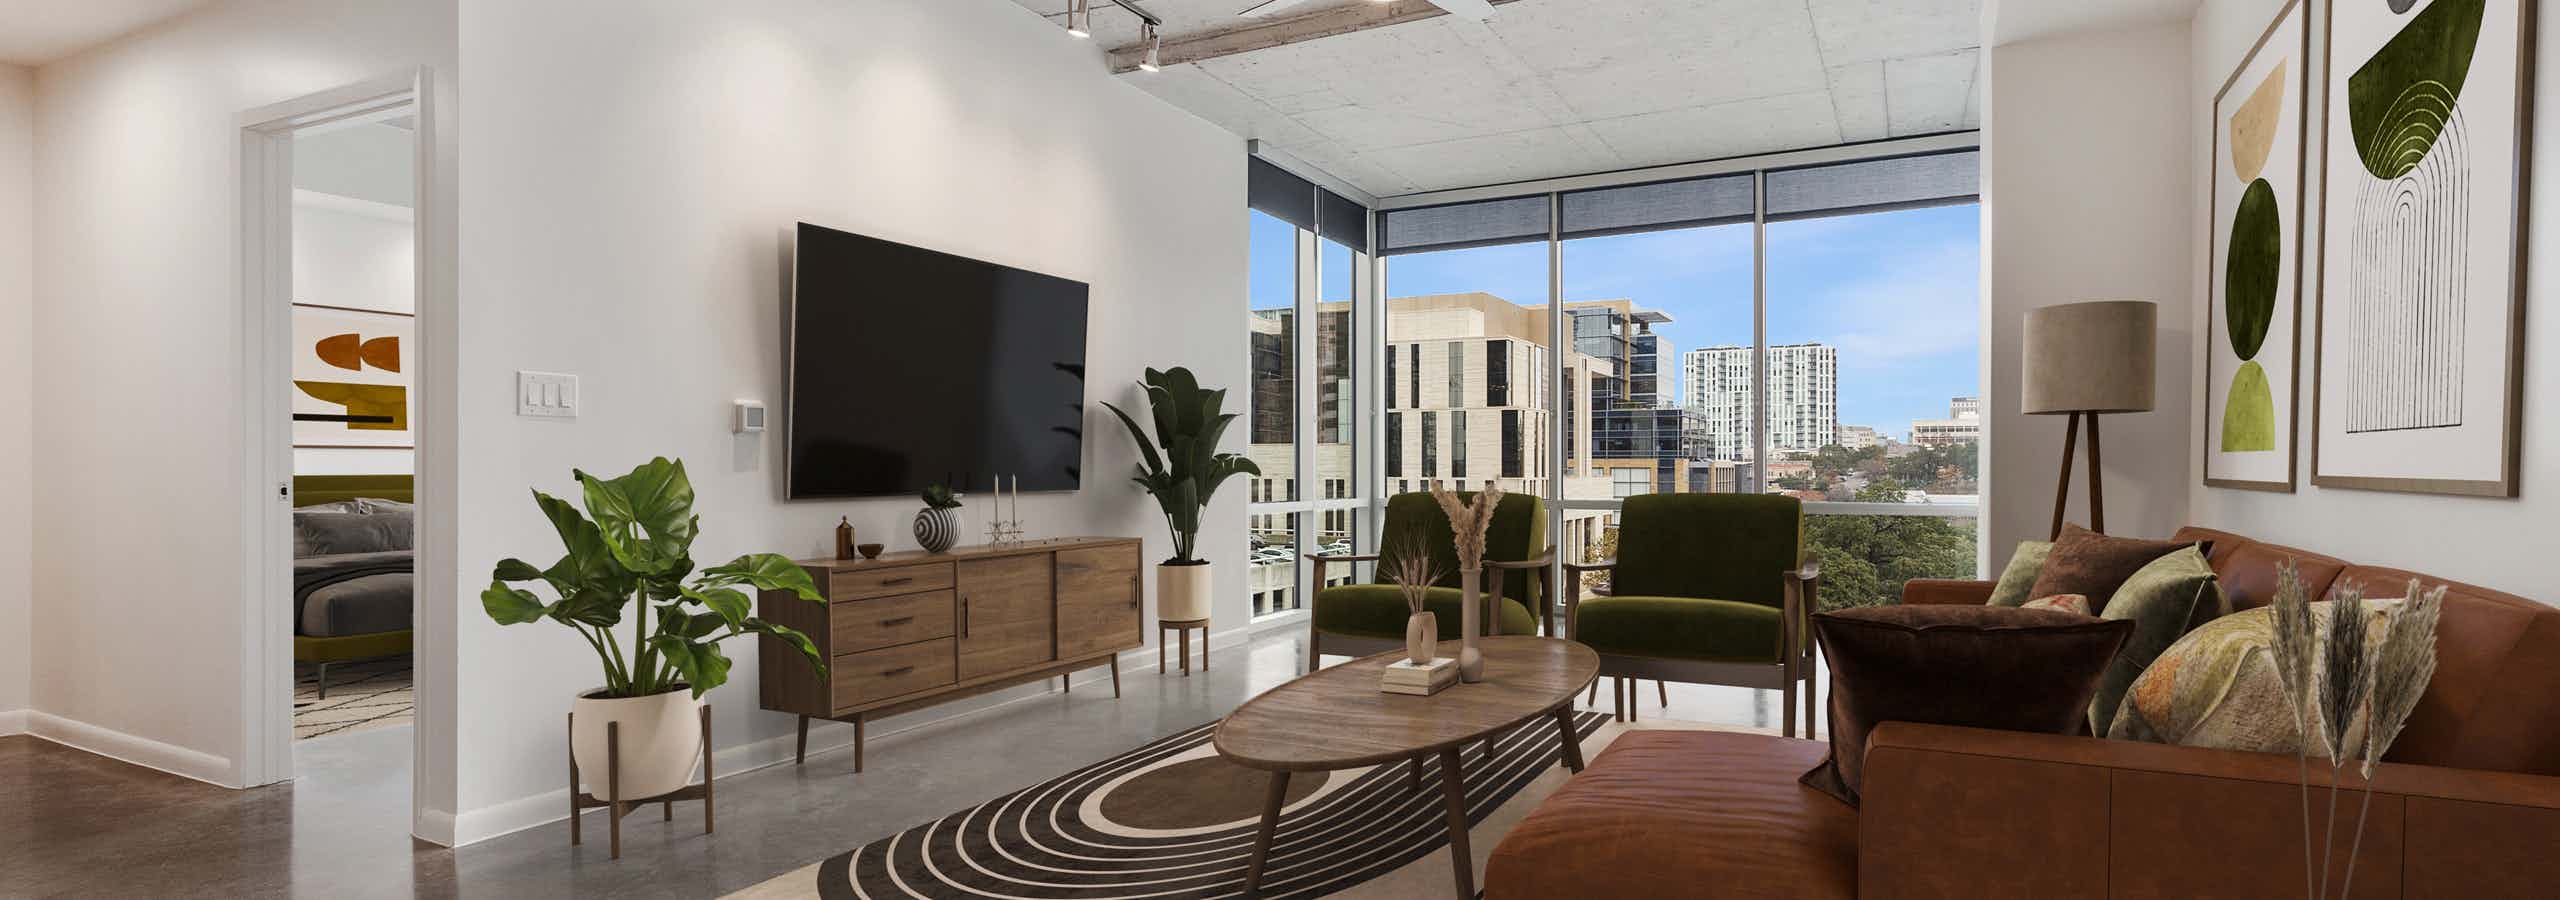 Redesigned interior: living room